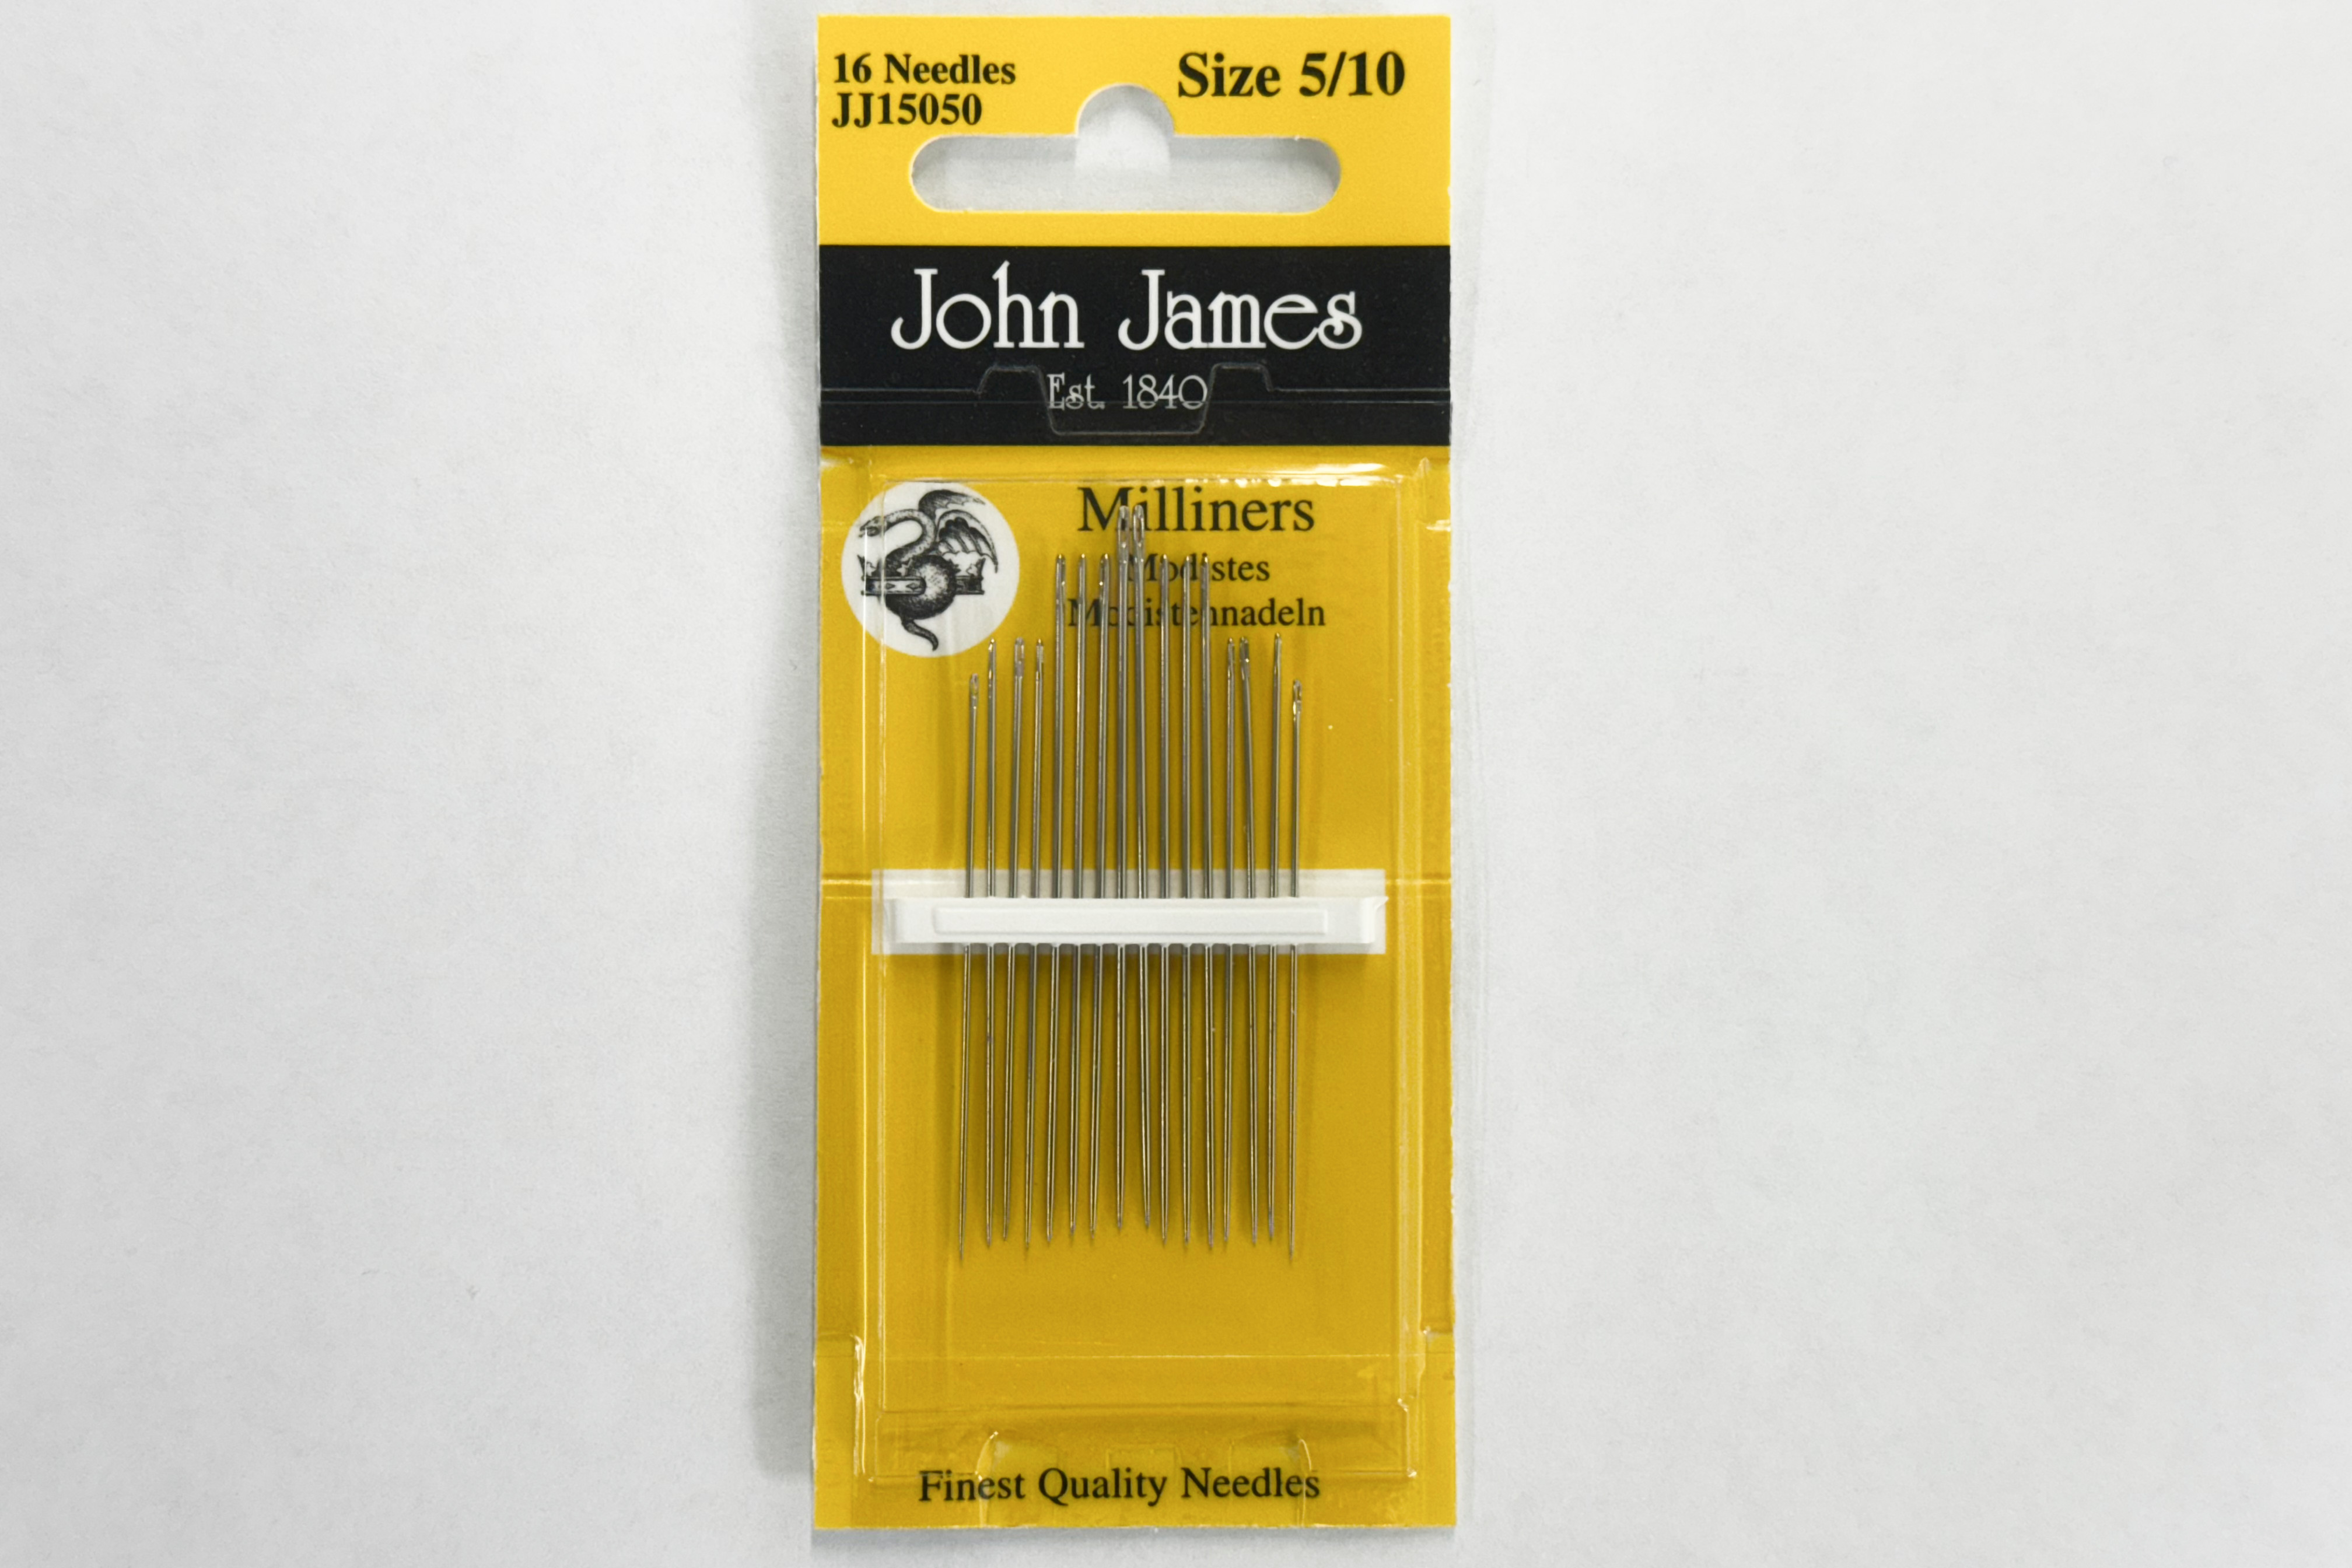 John James Needles - Milliner